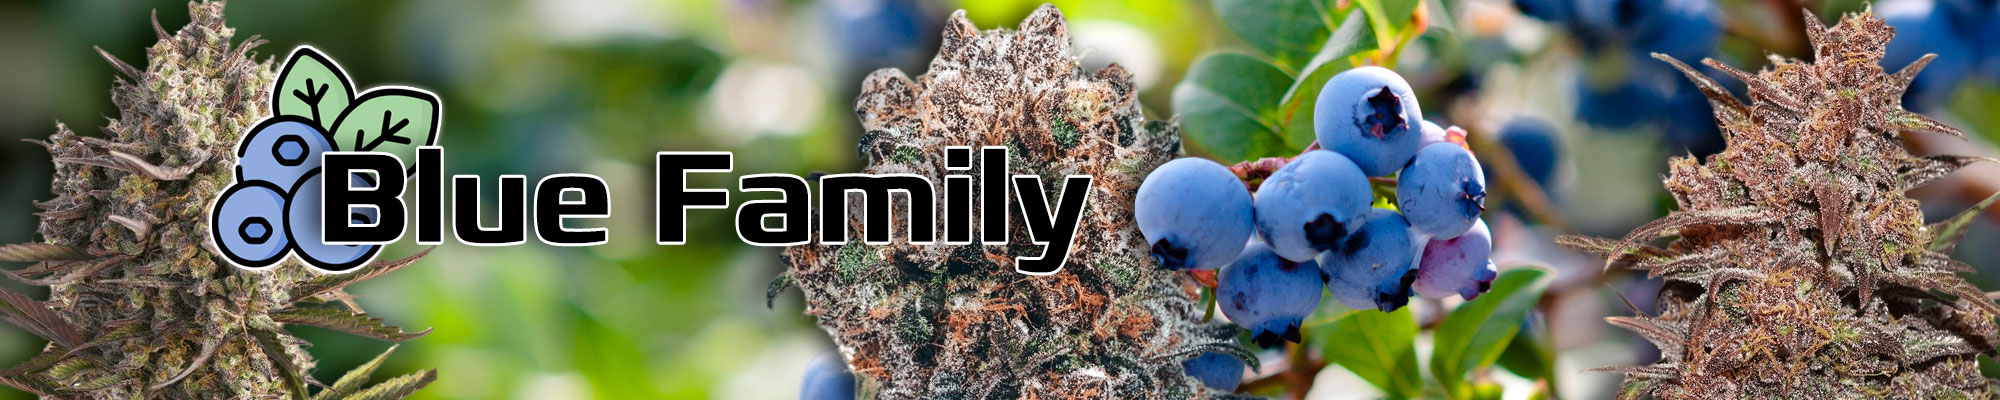 Blue family cannabis families